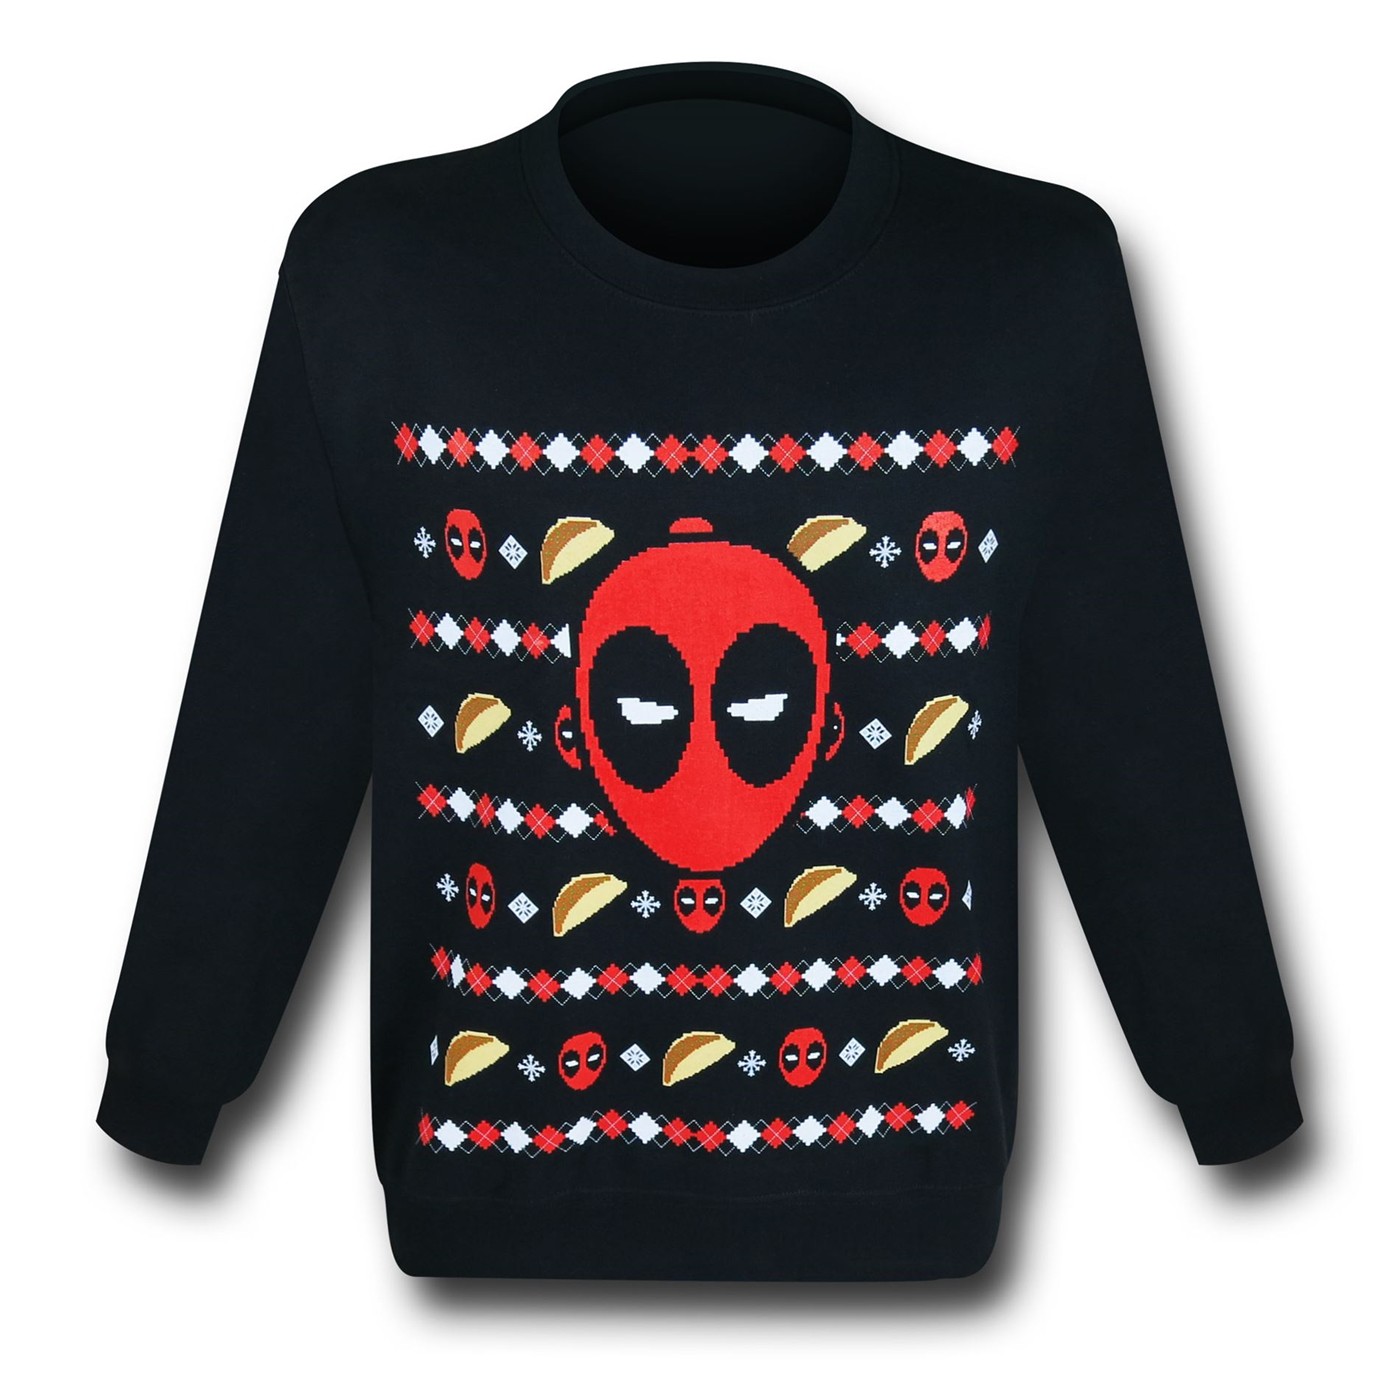 Deadpool Tacos "Christmas Sweater" Sweatshirt